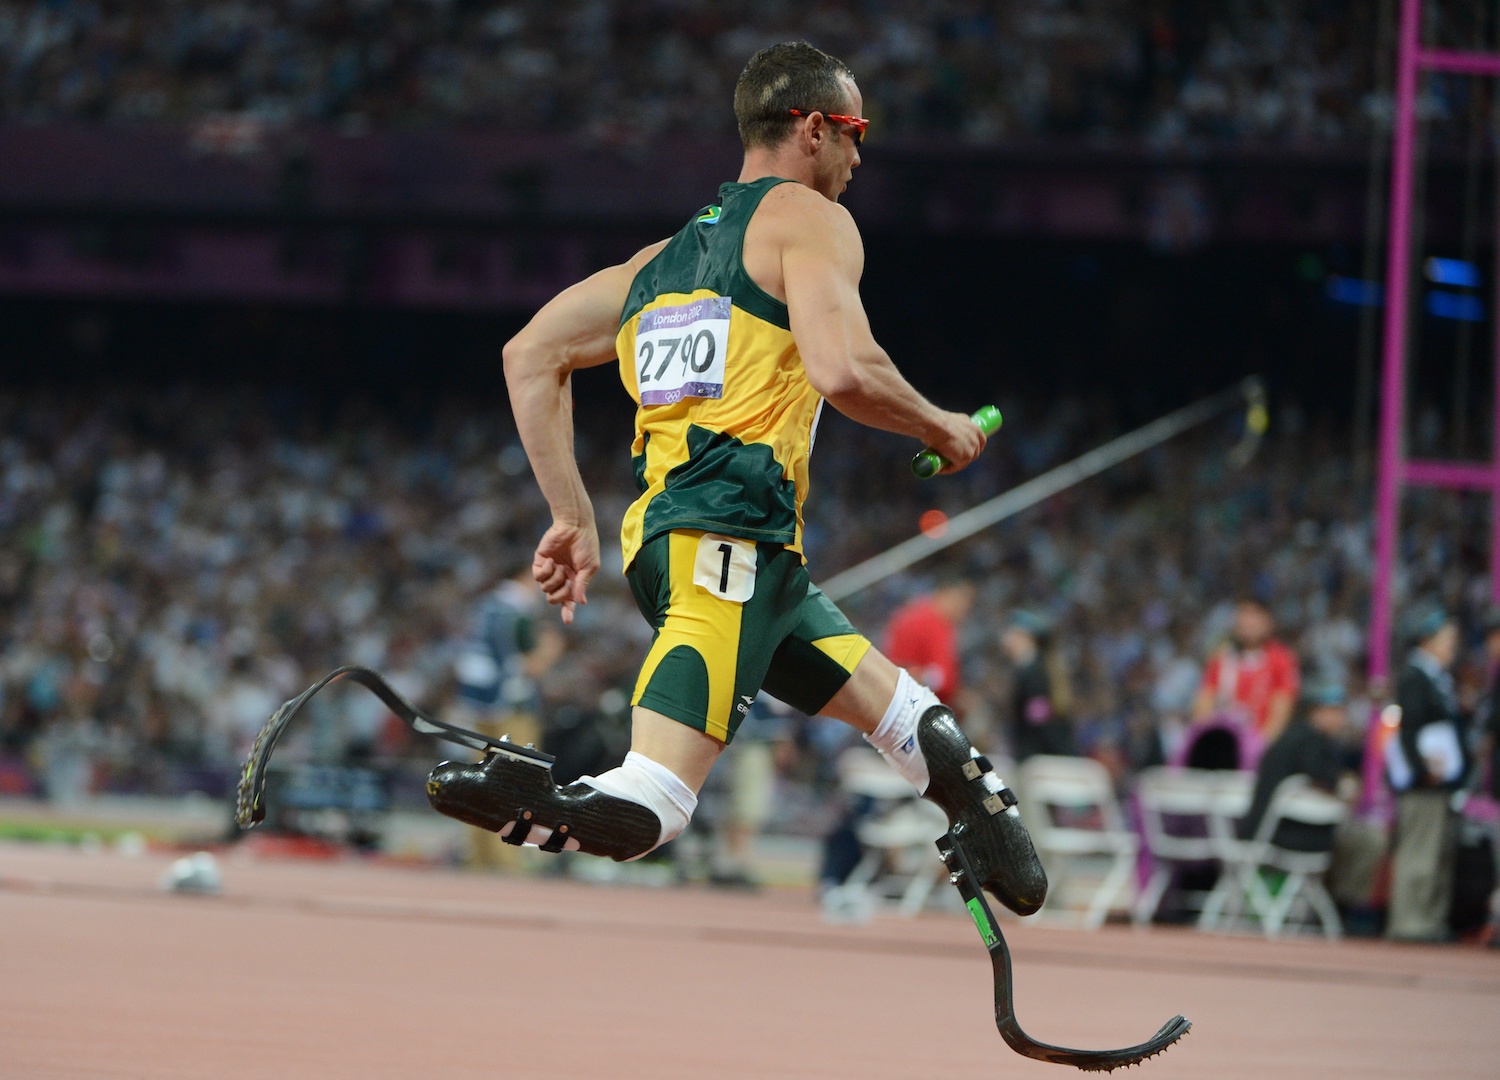 Oscar Pistorius runs a sprint at the 2012 Olympics